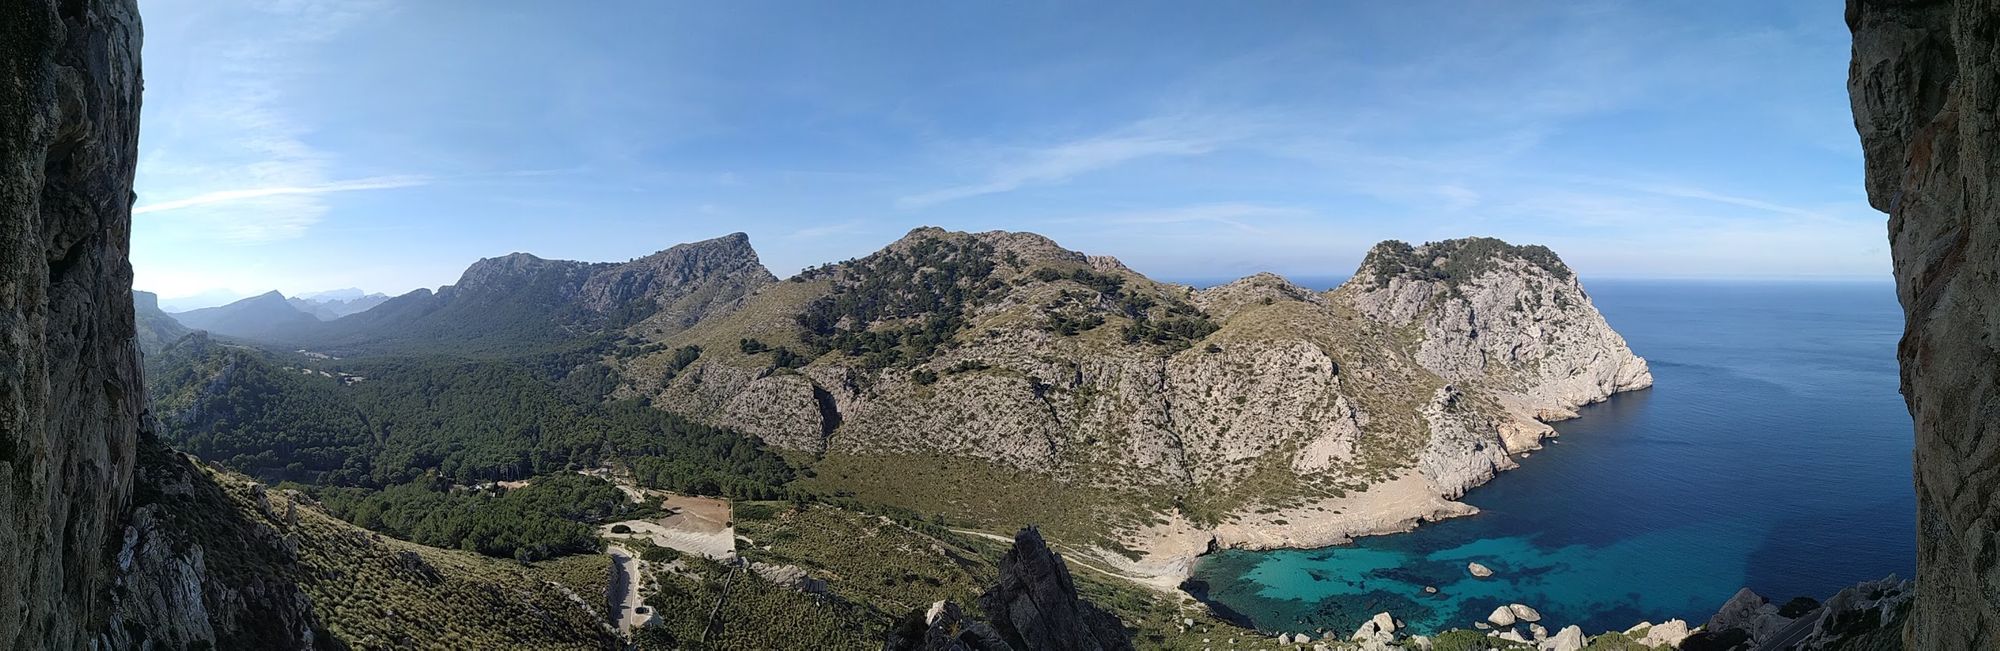 Rock Climbing Mallorca: El Fumat (Formentor)